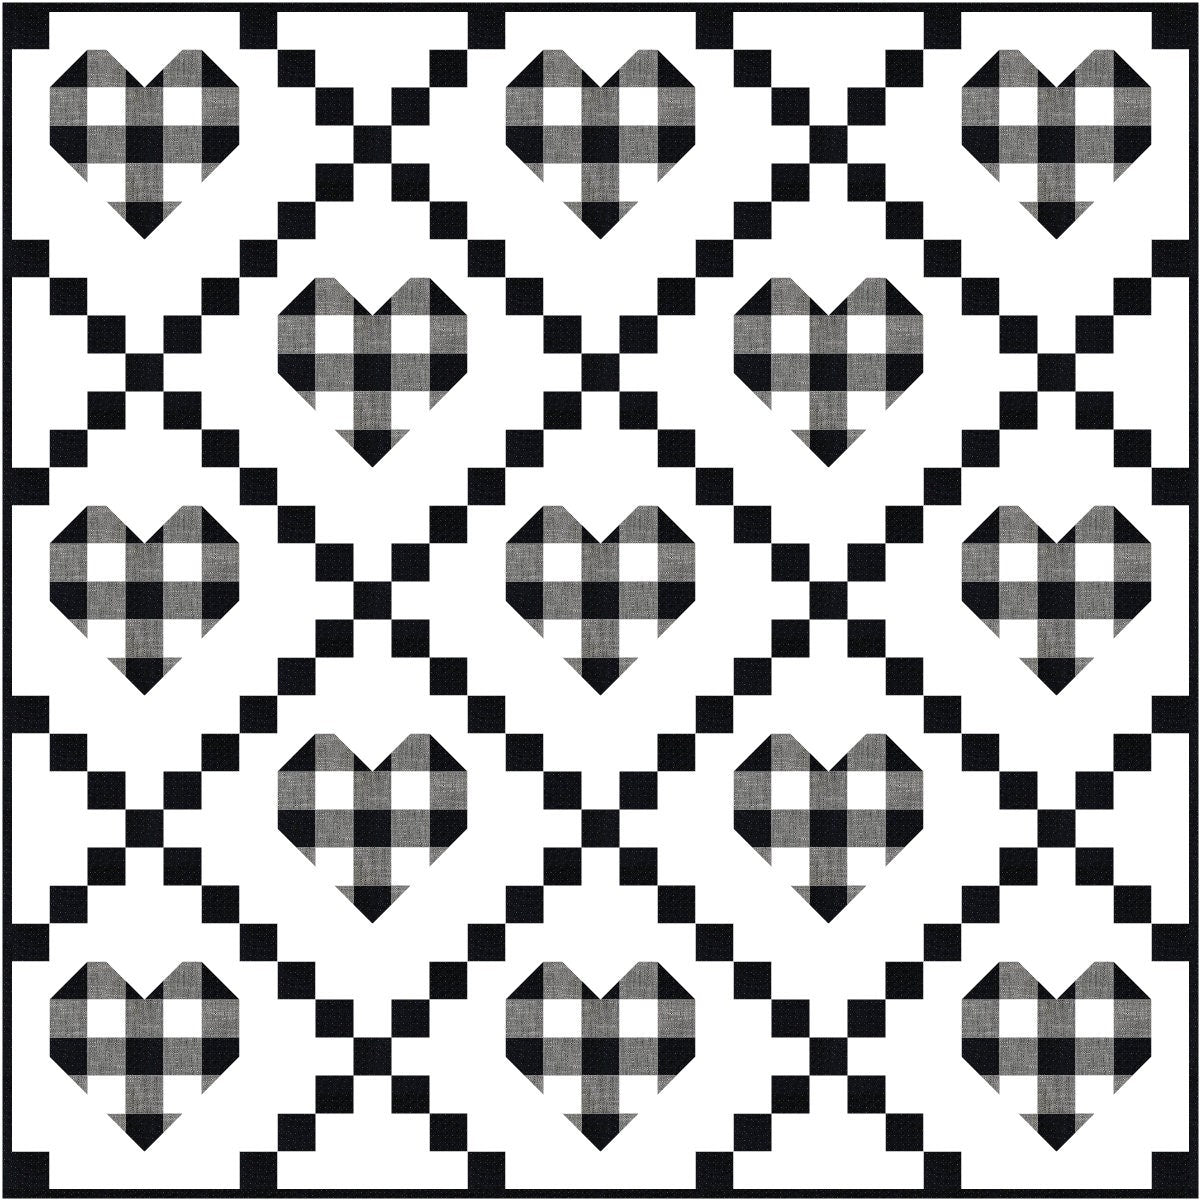 Farmhouse Hearts Quilt PDF Pattern - Instant Download